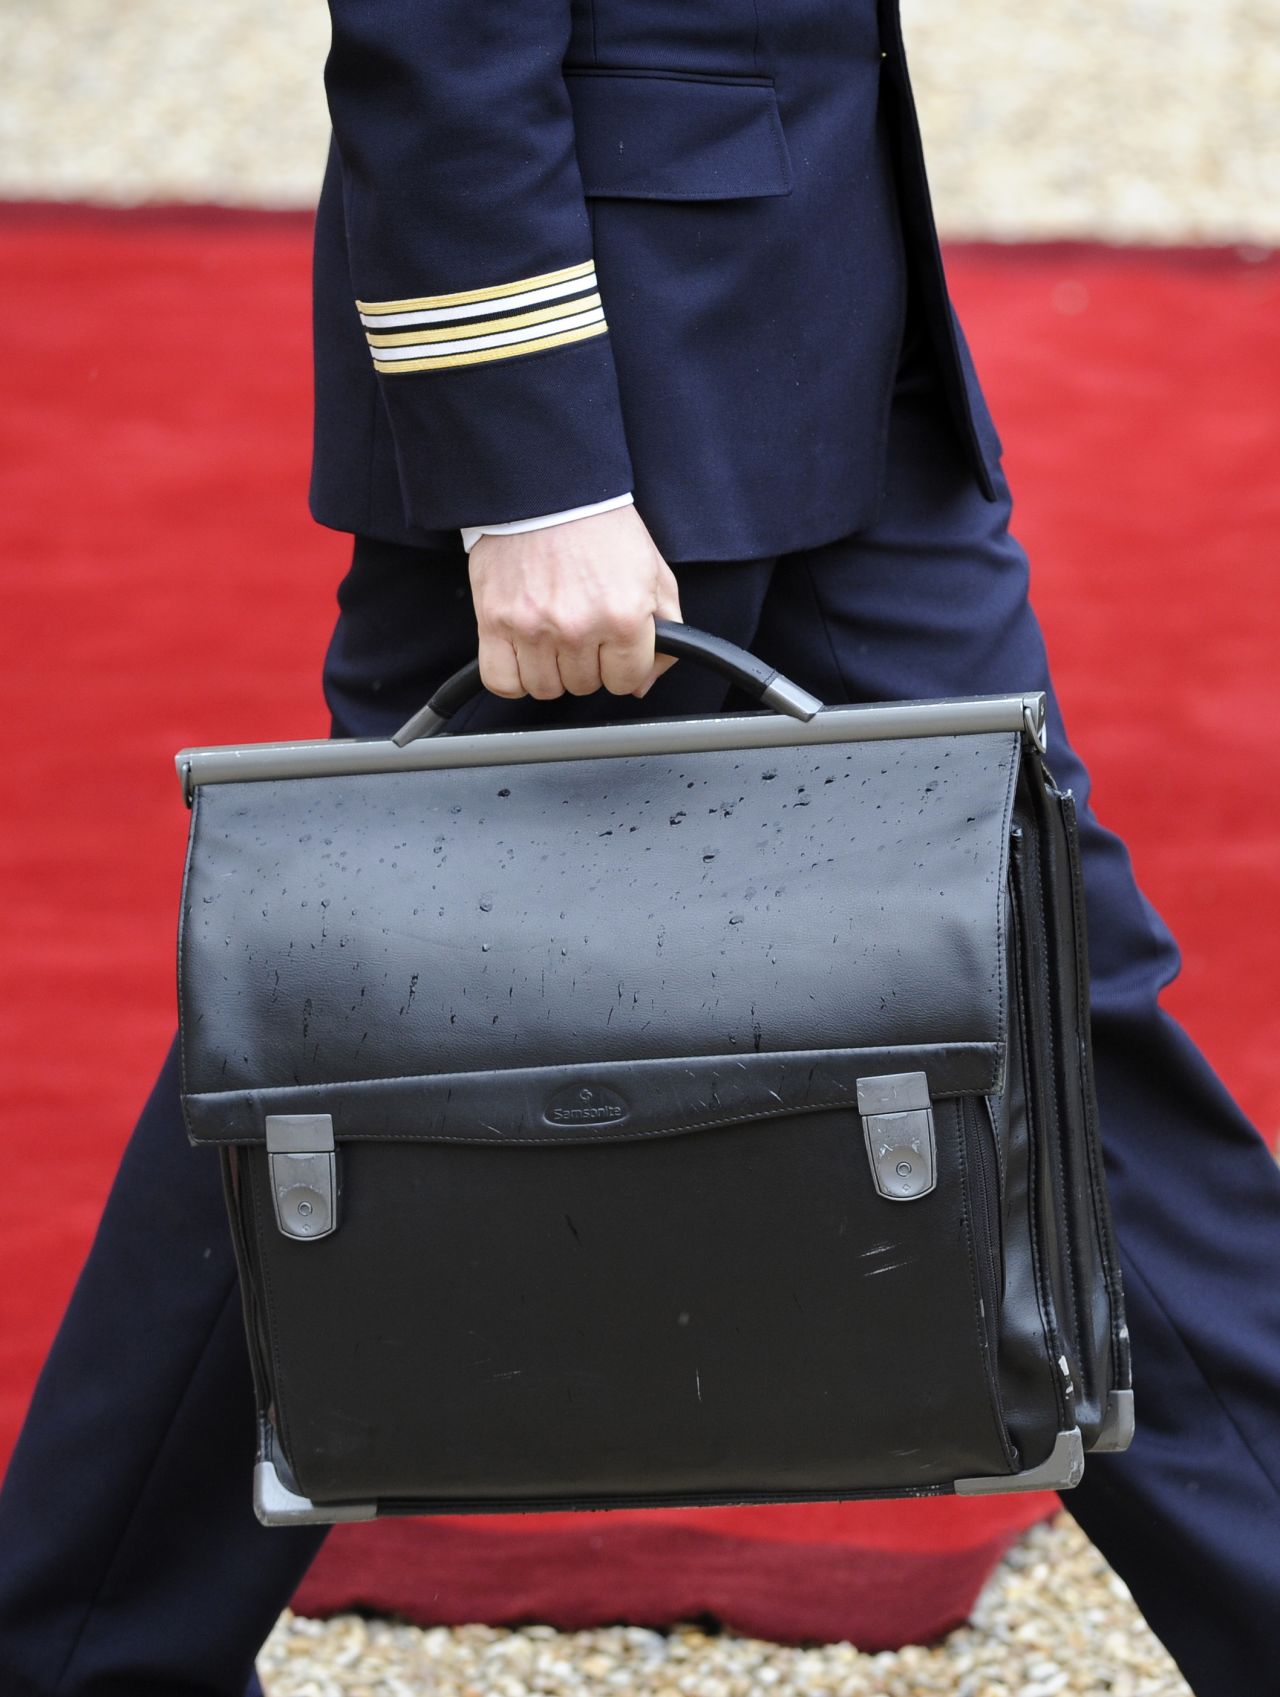 The French president's nuclear satchel is carried through the Élysée Palace.